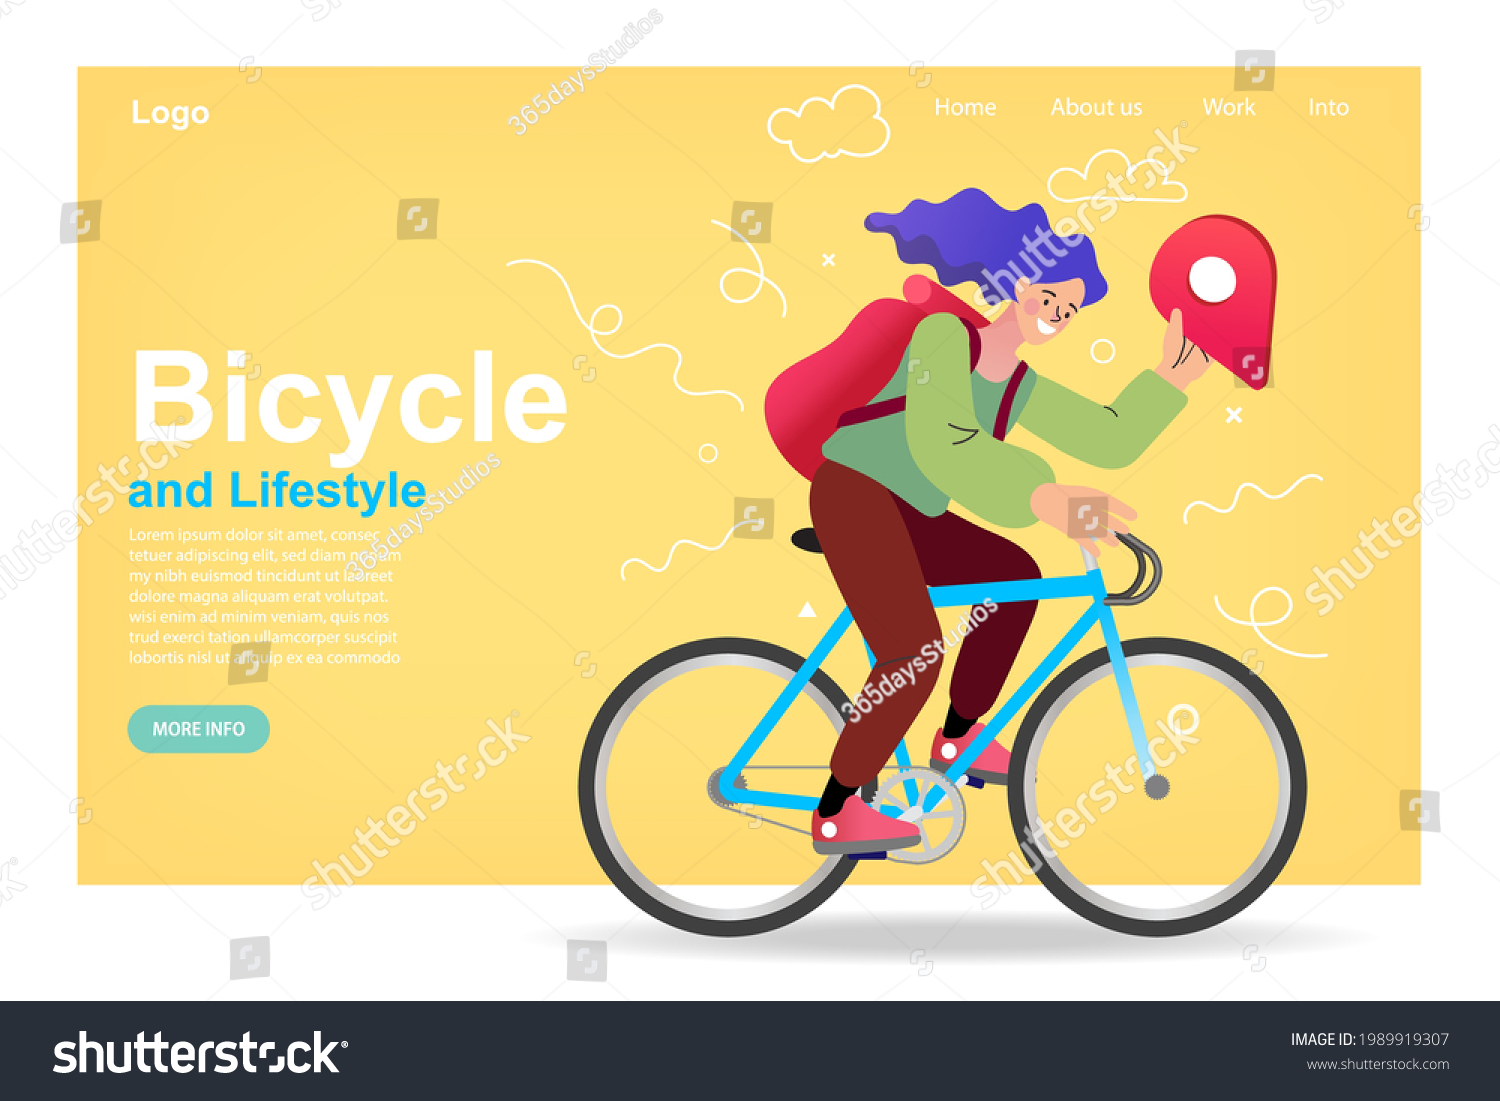 306,383 Bike ride background Images, Stock Photos & Vectors | Shutterstock